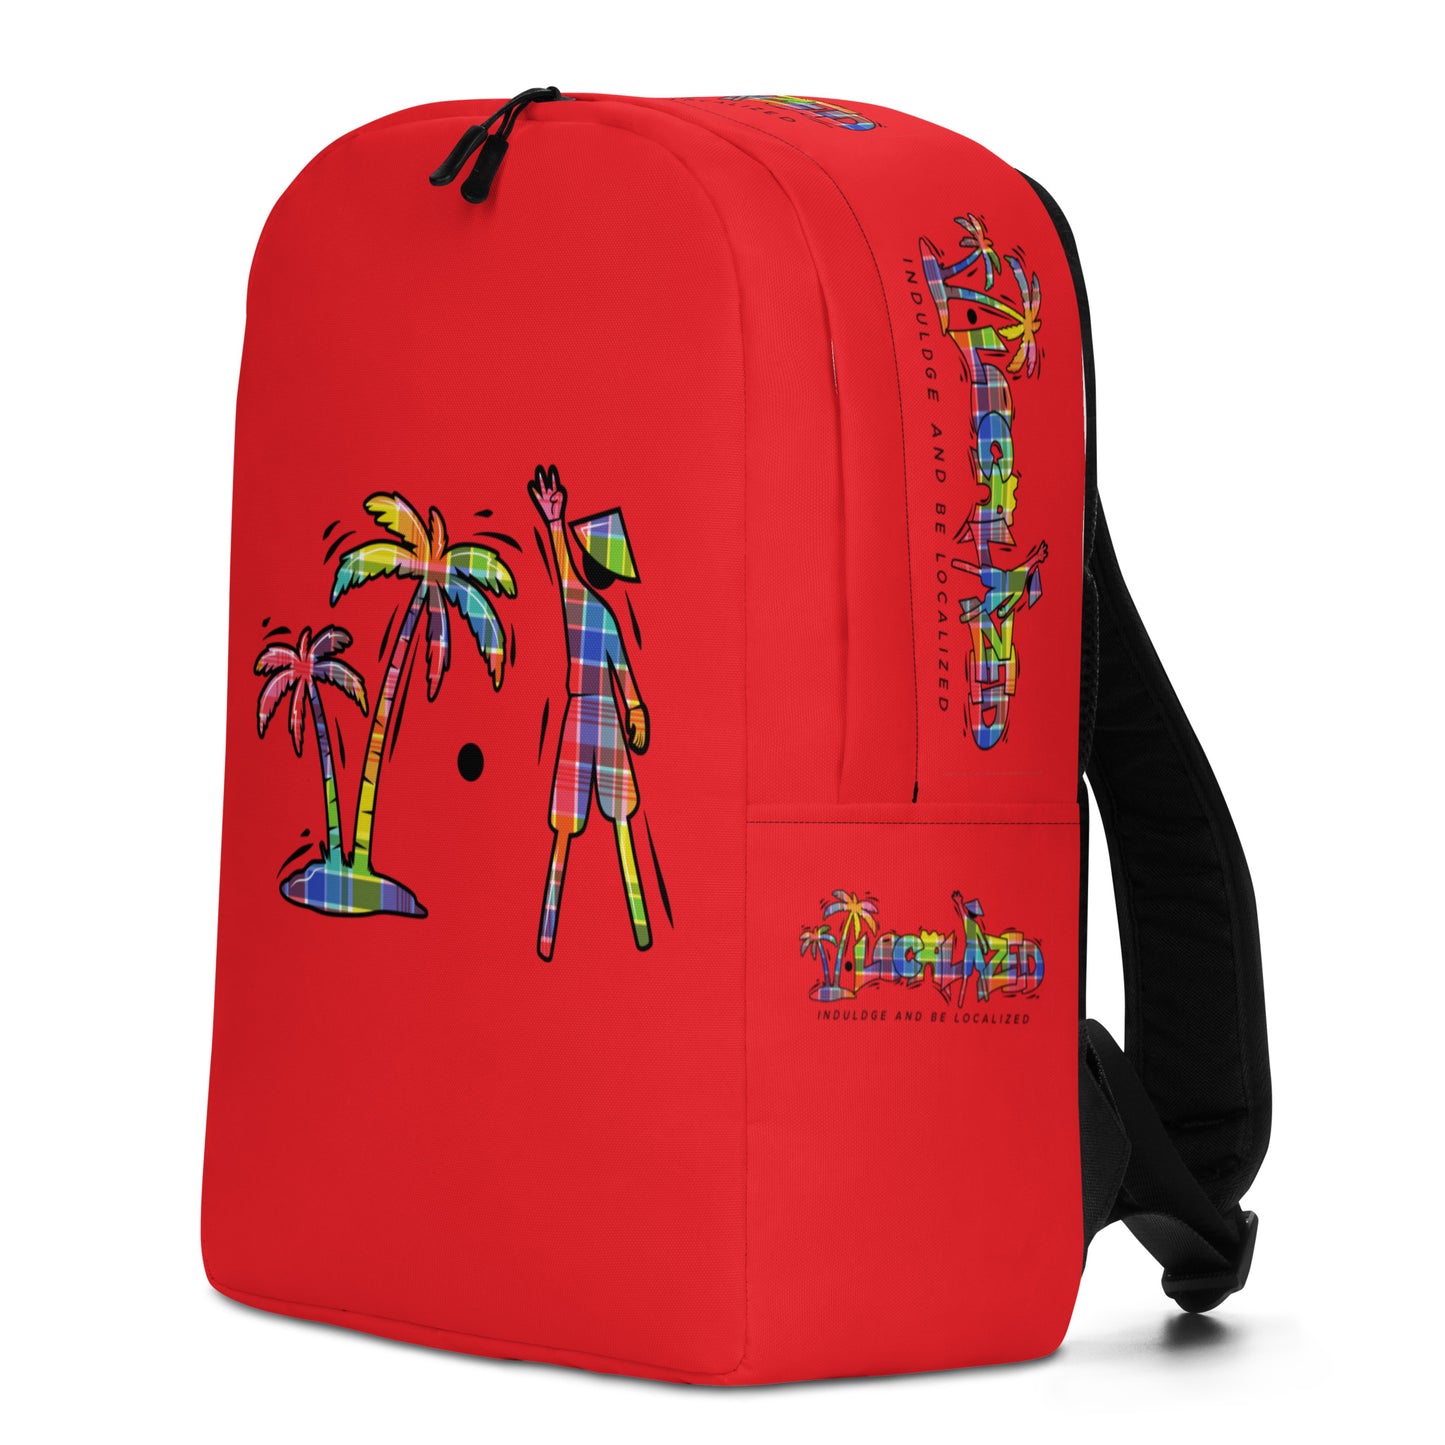 Red V.Localized (Madras) Backpack